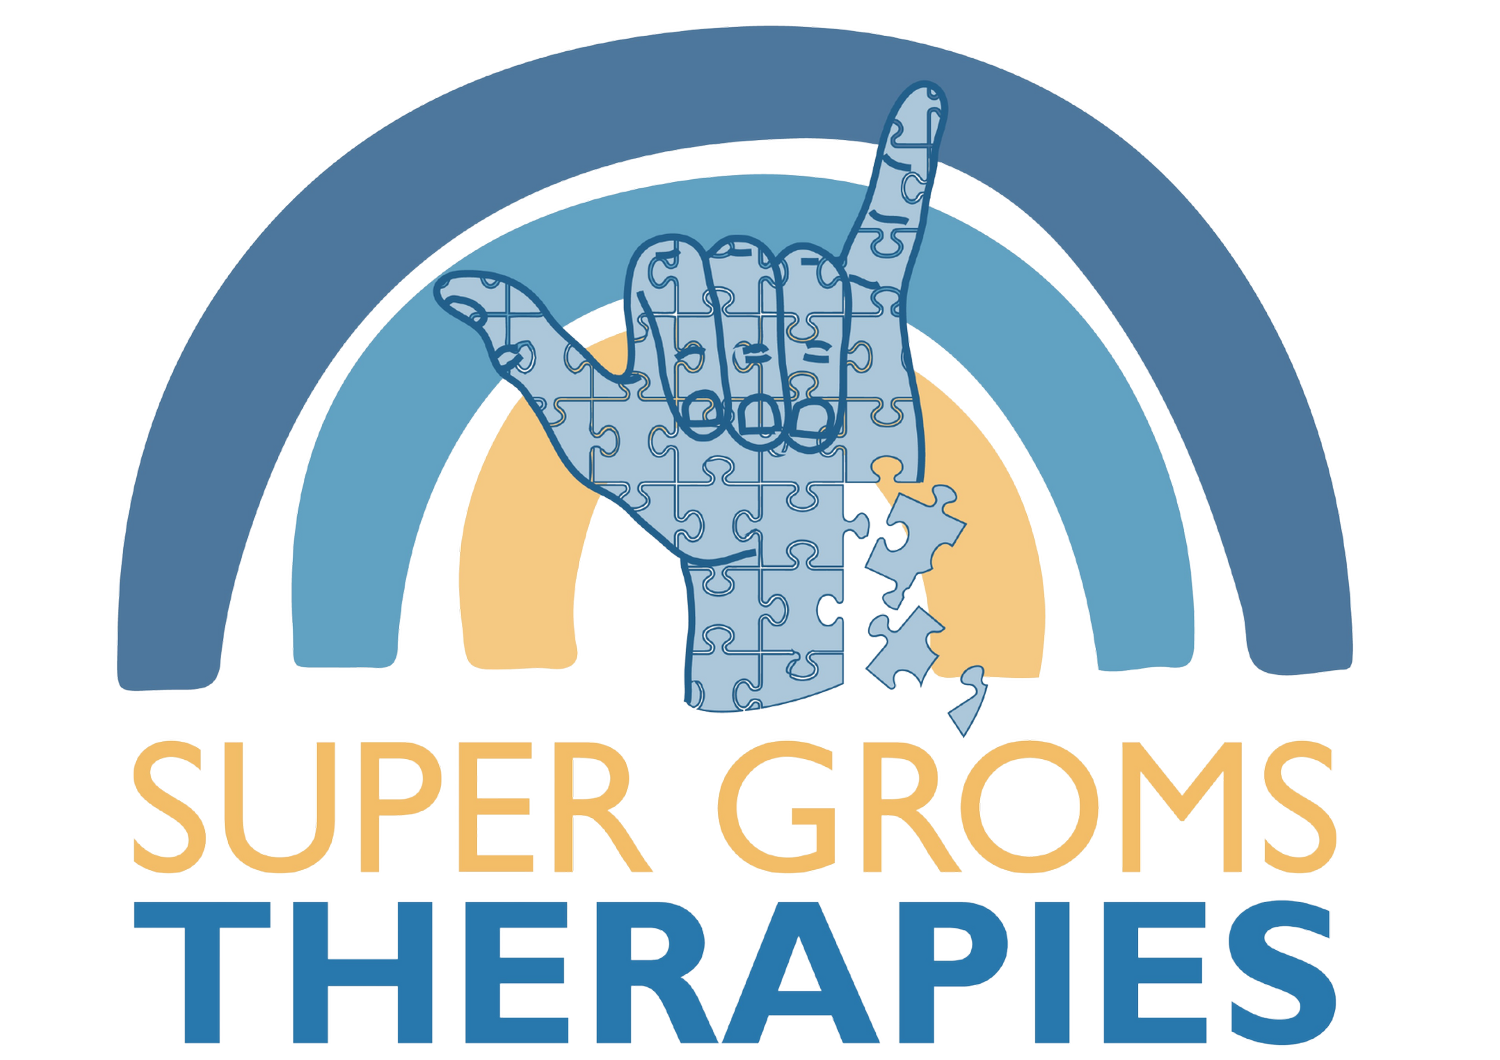 Super Groms Therapies 